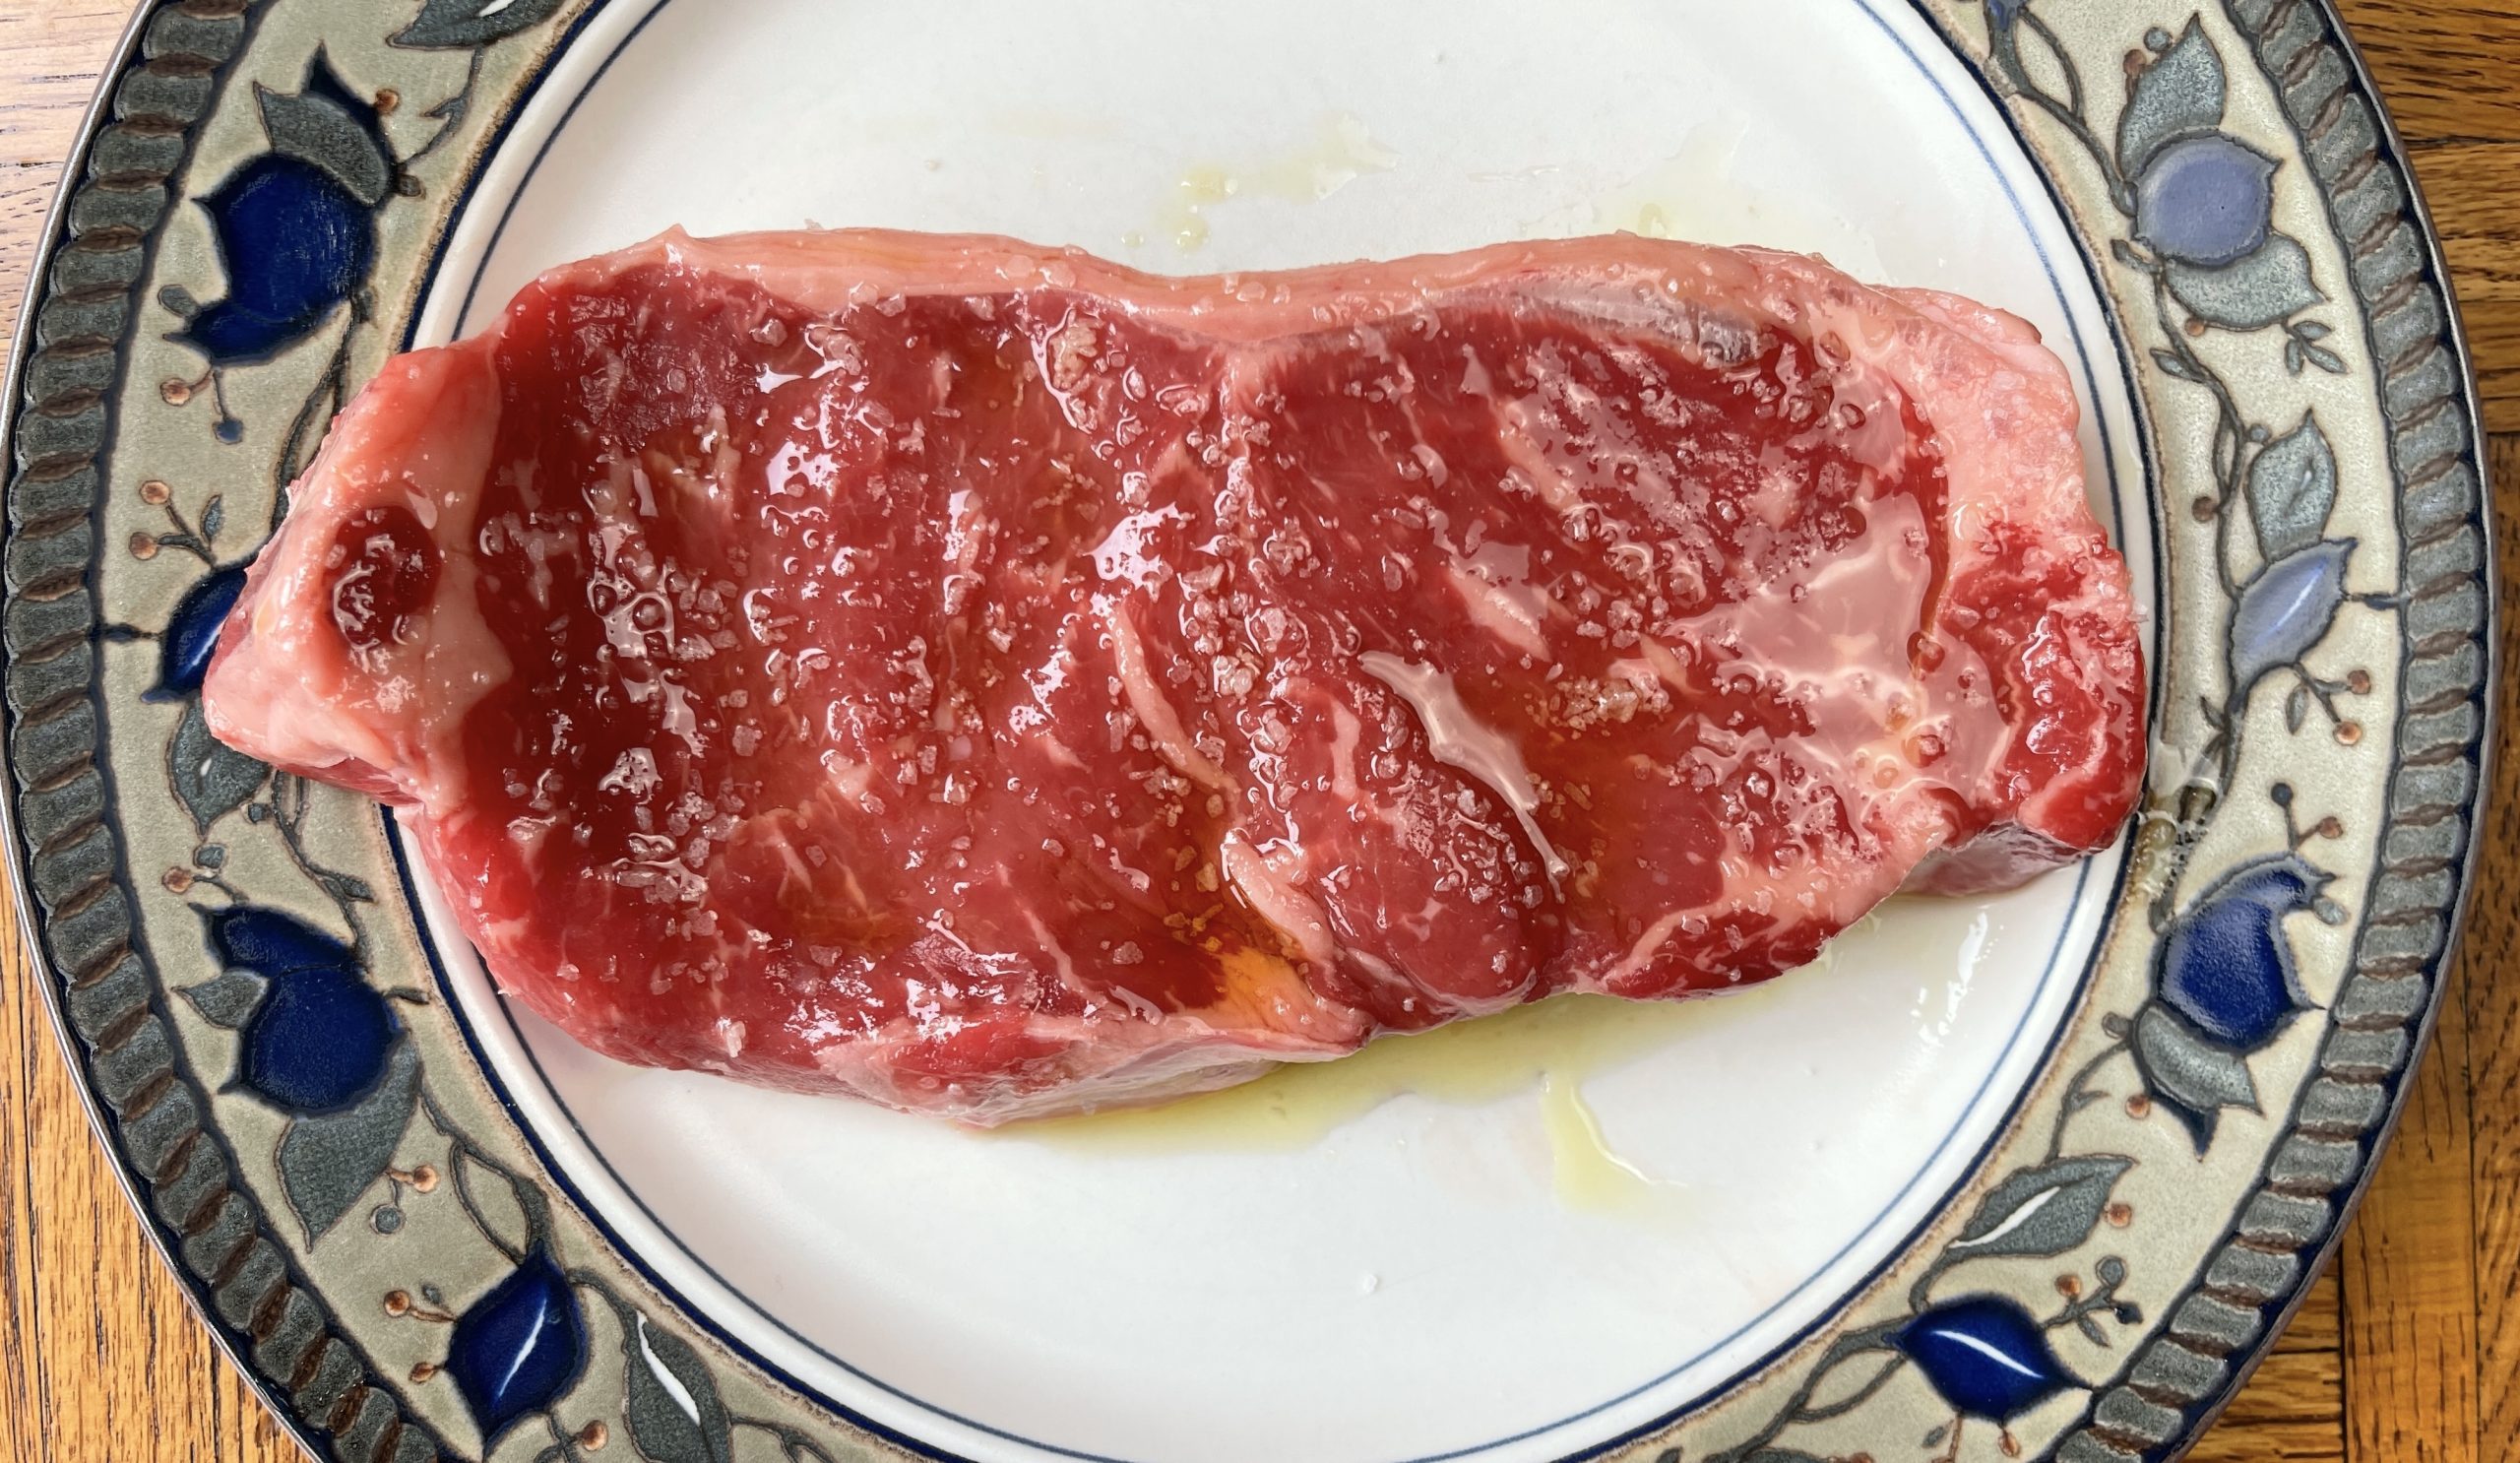 coat the steak in olive oil and kosher salt